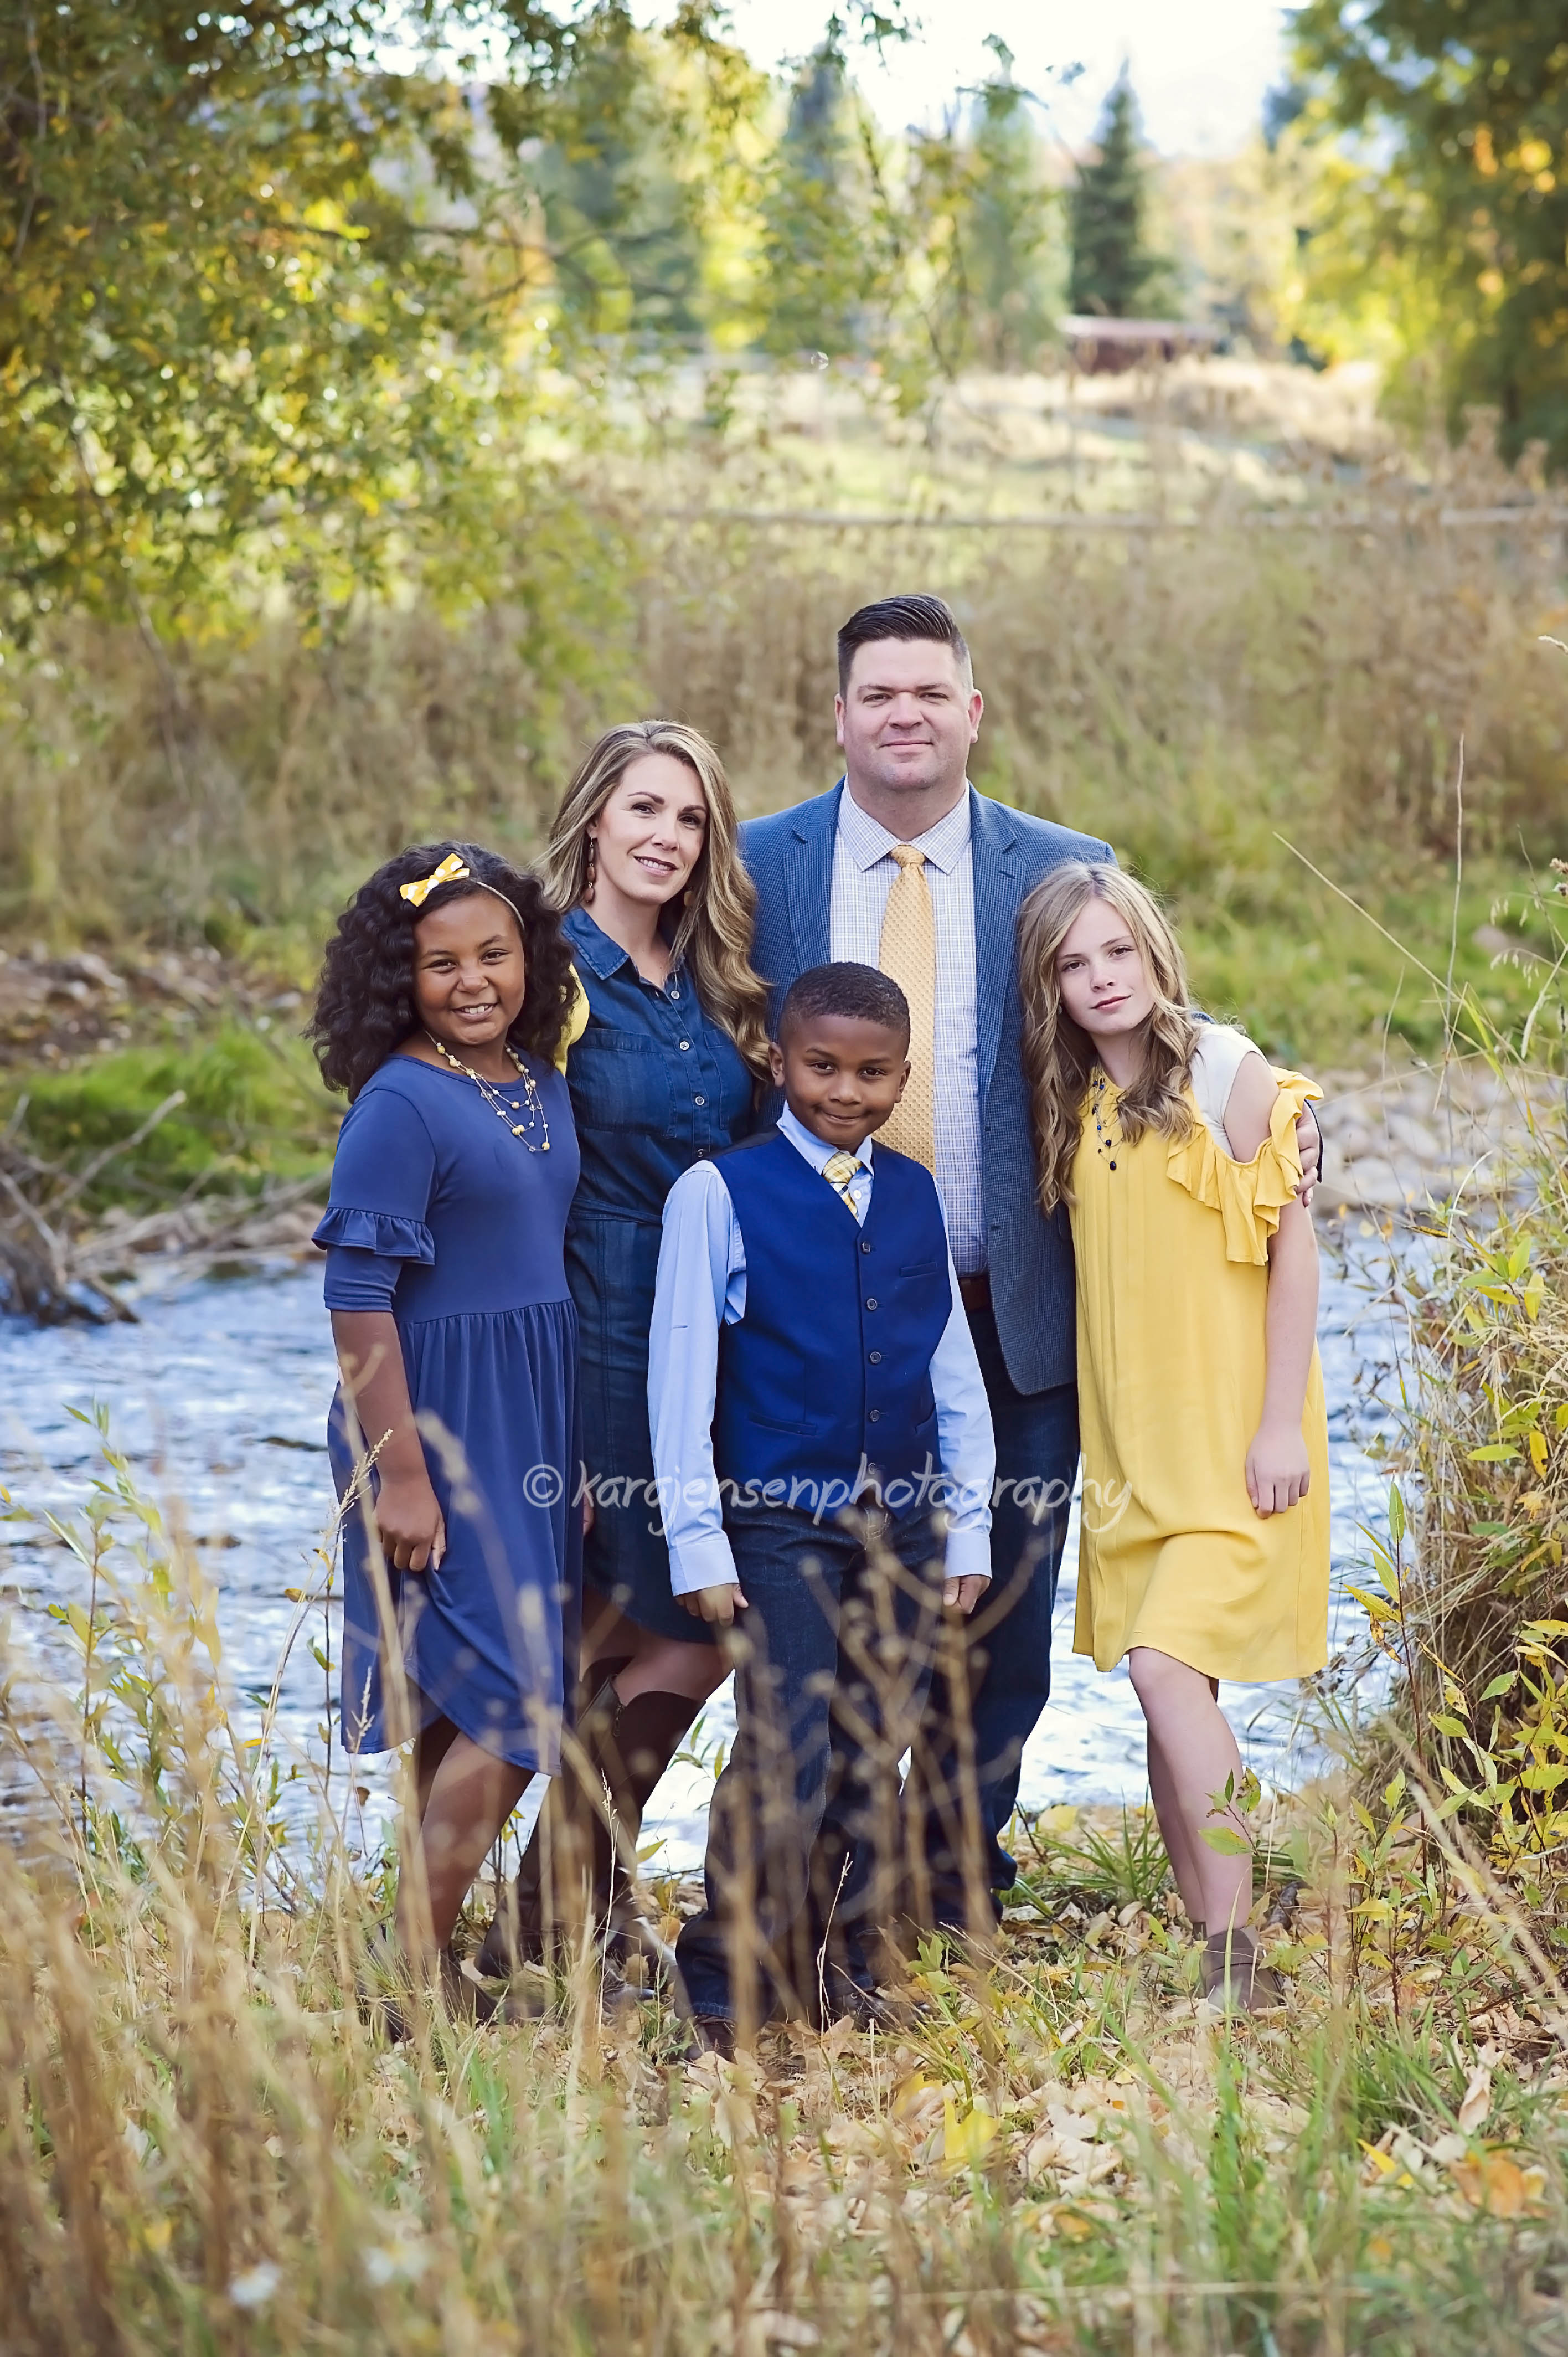 Jensen Family – kara jensen photography